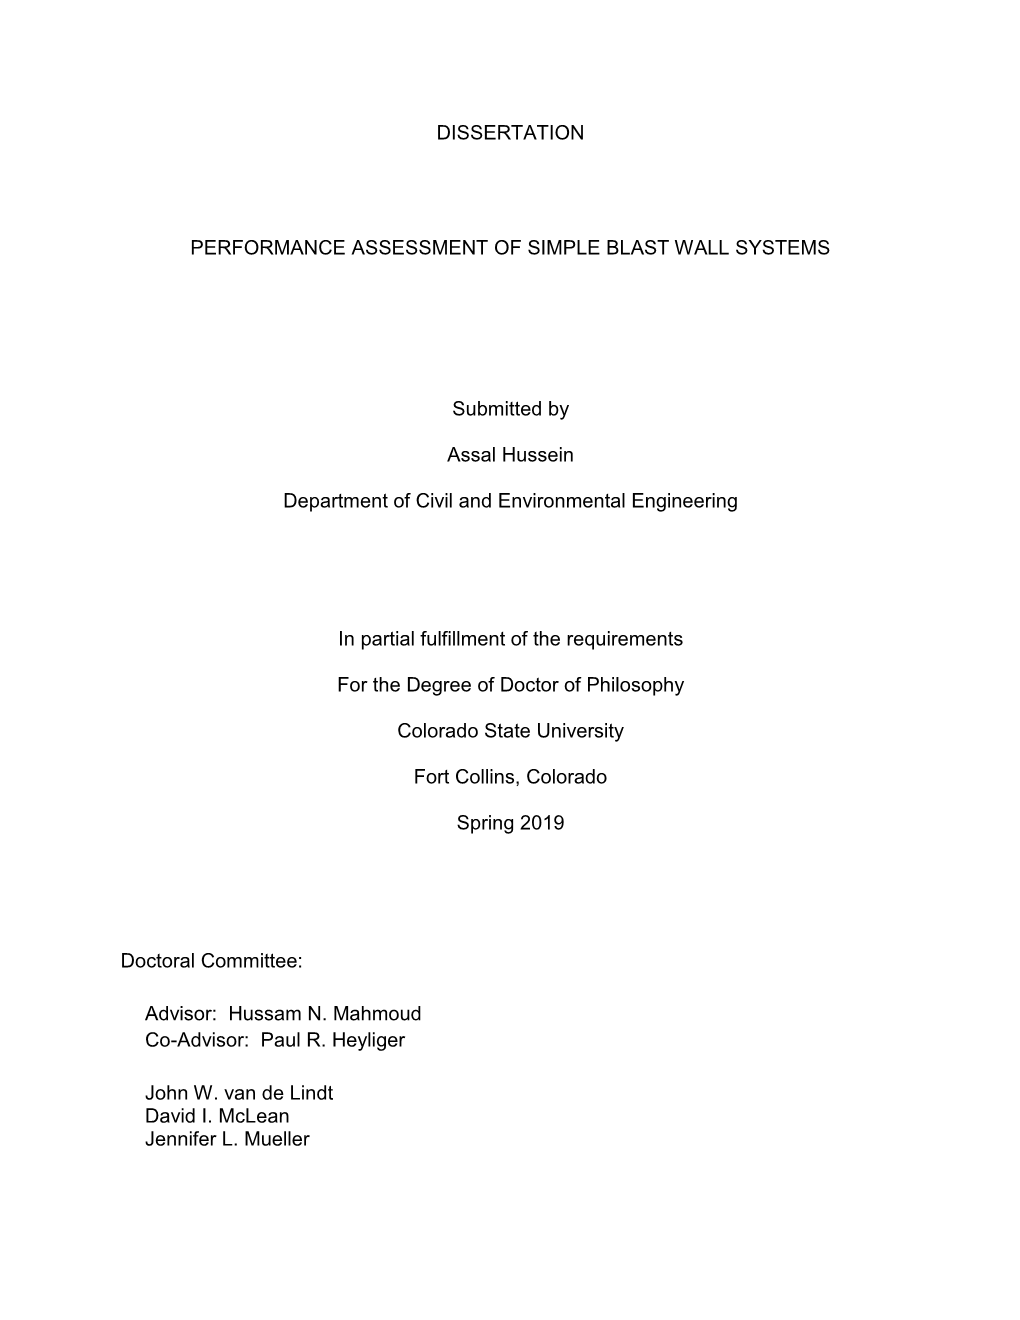 Dissertation Performance Assessment of Simple Blast